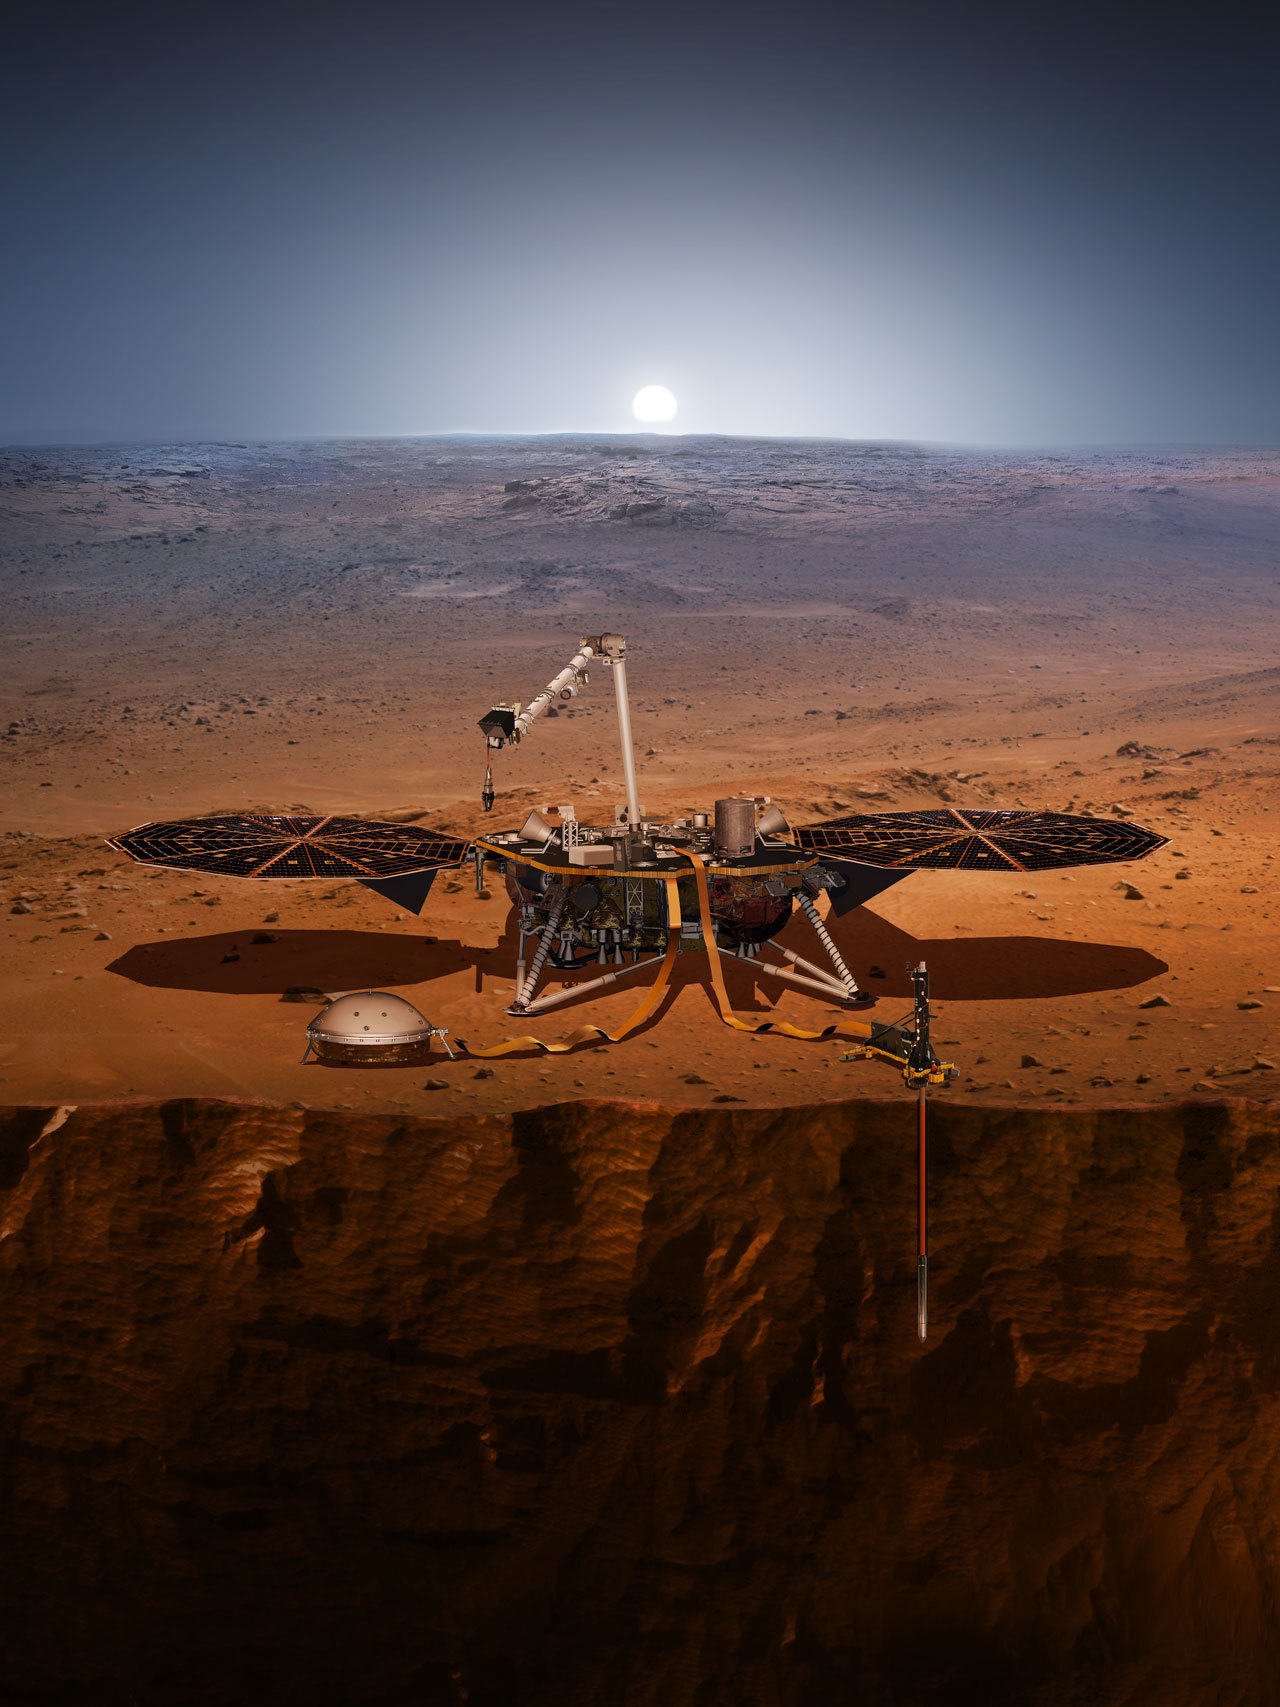 An artist's impression of the InSight lander on Mars. Credit: NASA/JPL-Caltech